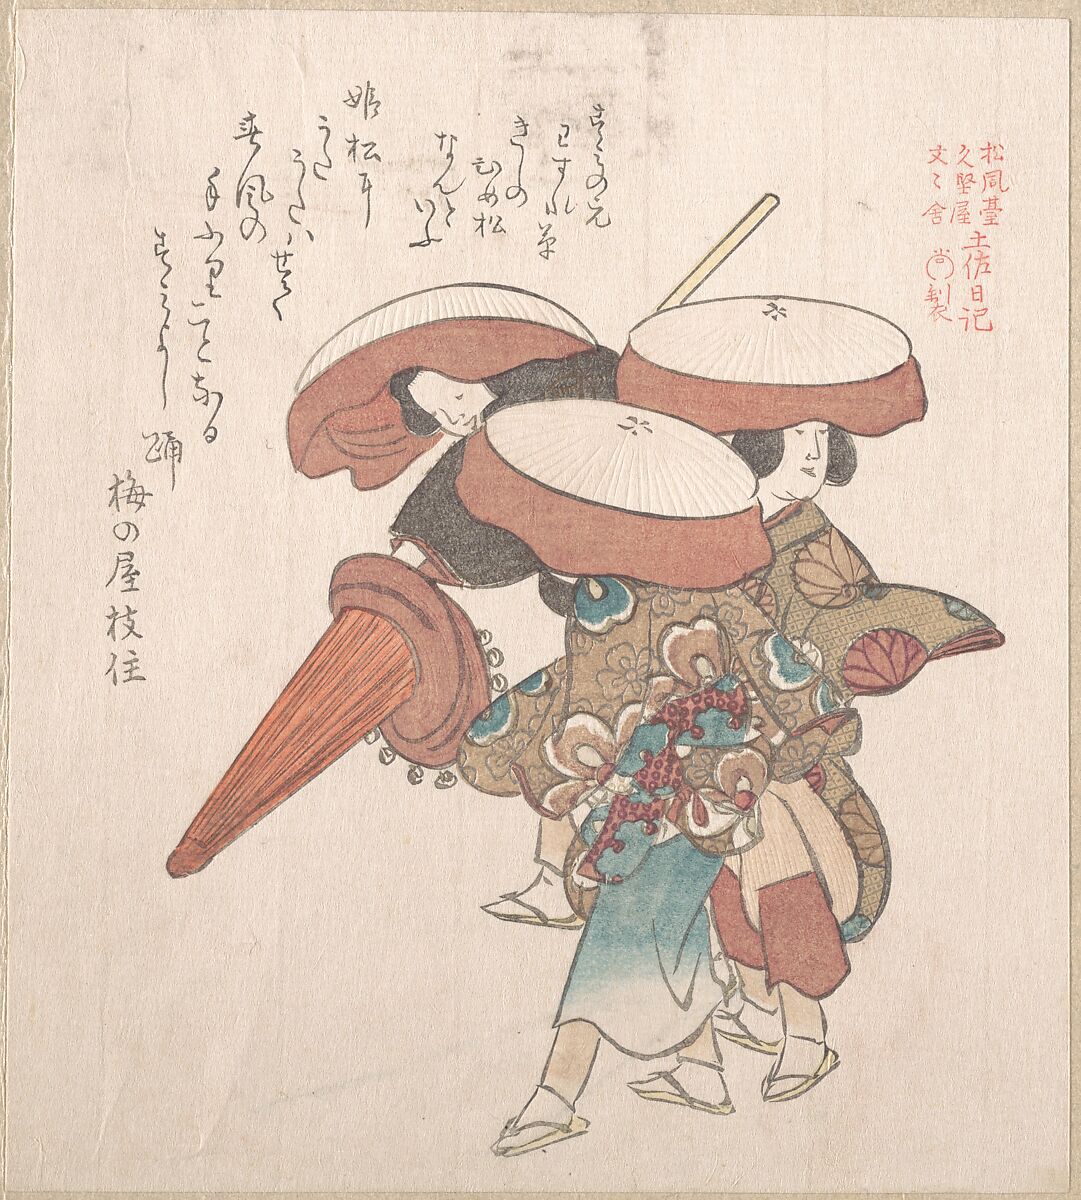 Three Dancers of Sumiyoshi or Suminoye, Kubo Shunman (Japanese, 1757–1820) (?), Woodblock print (surimono); ink and color on paper, Japan 